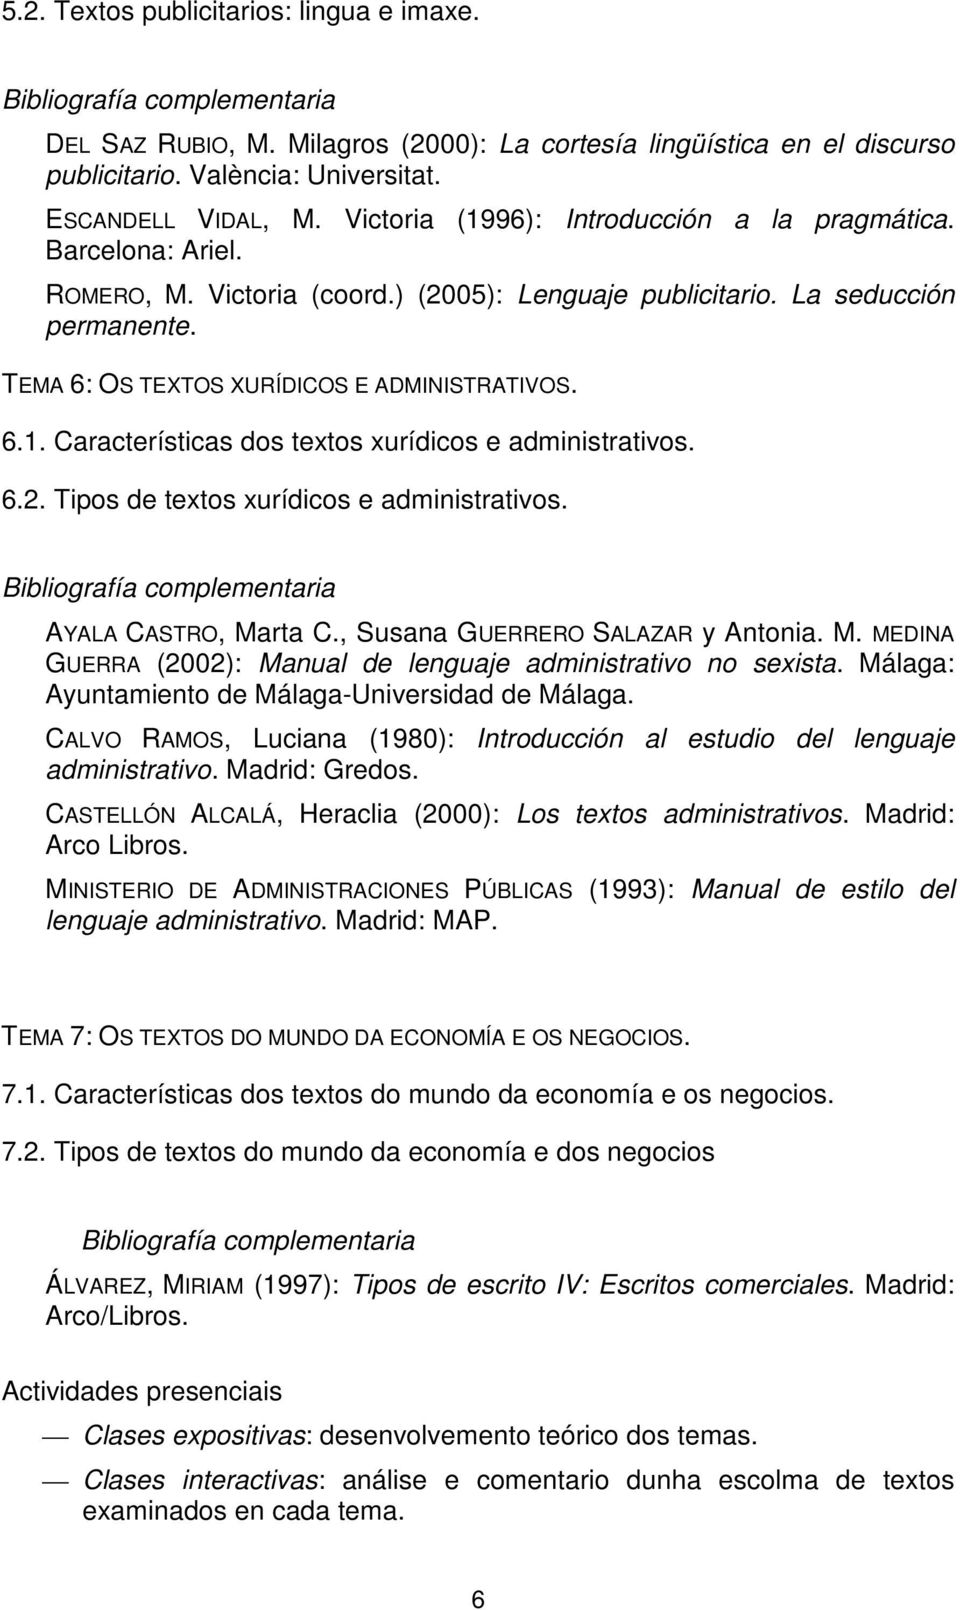 6.2. Tipos de textos xurídicos e administrativos. AYALA CASTRO, Marta C., Susana GUERRERO SALAZAR y Antonia. M. MEDINA GUERRA (2002): Manual de lenguaje administrativo no sexista.